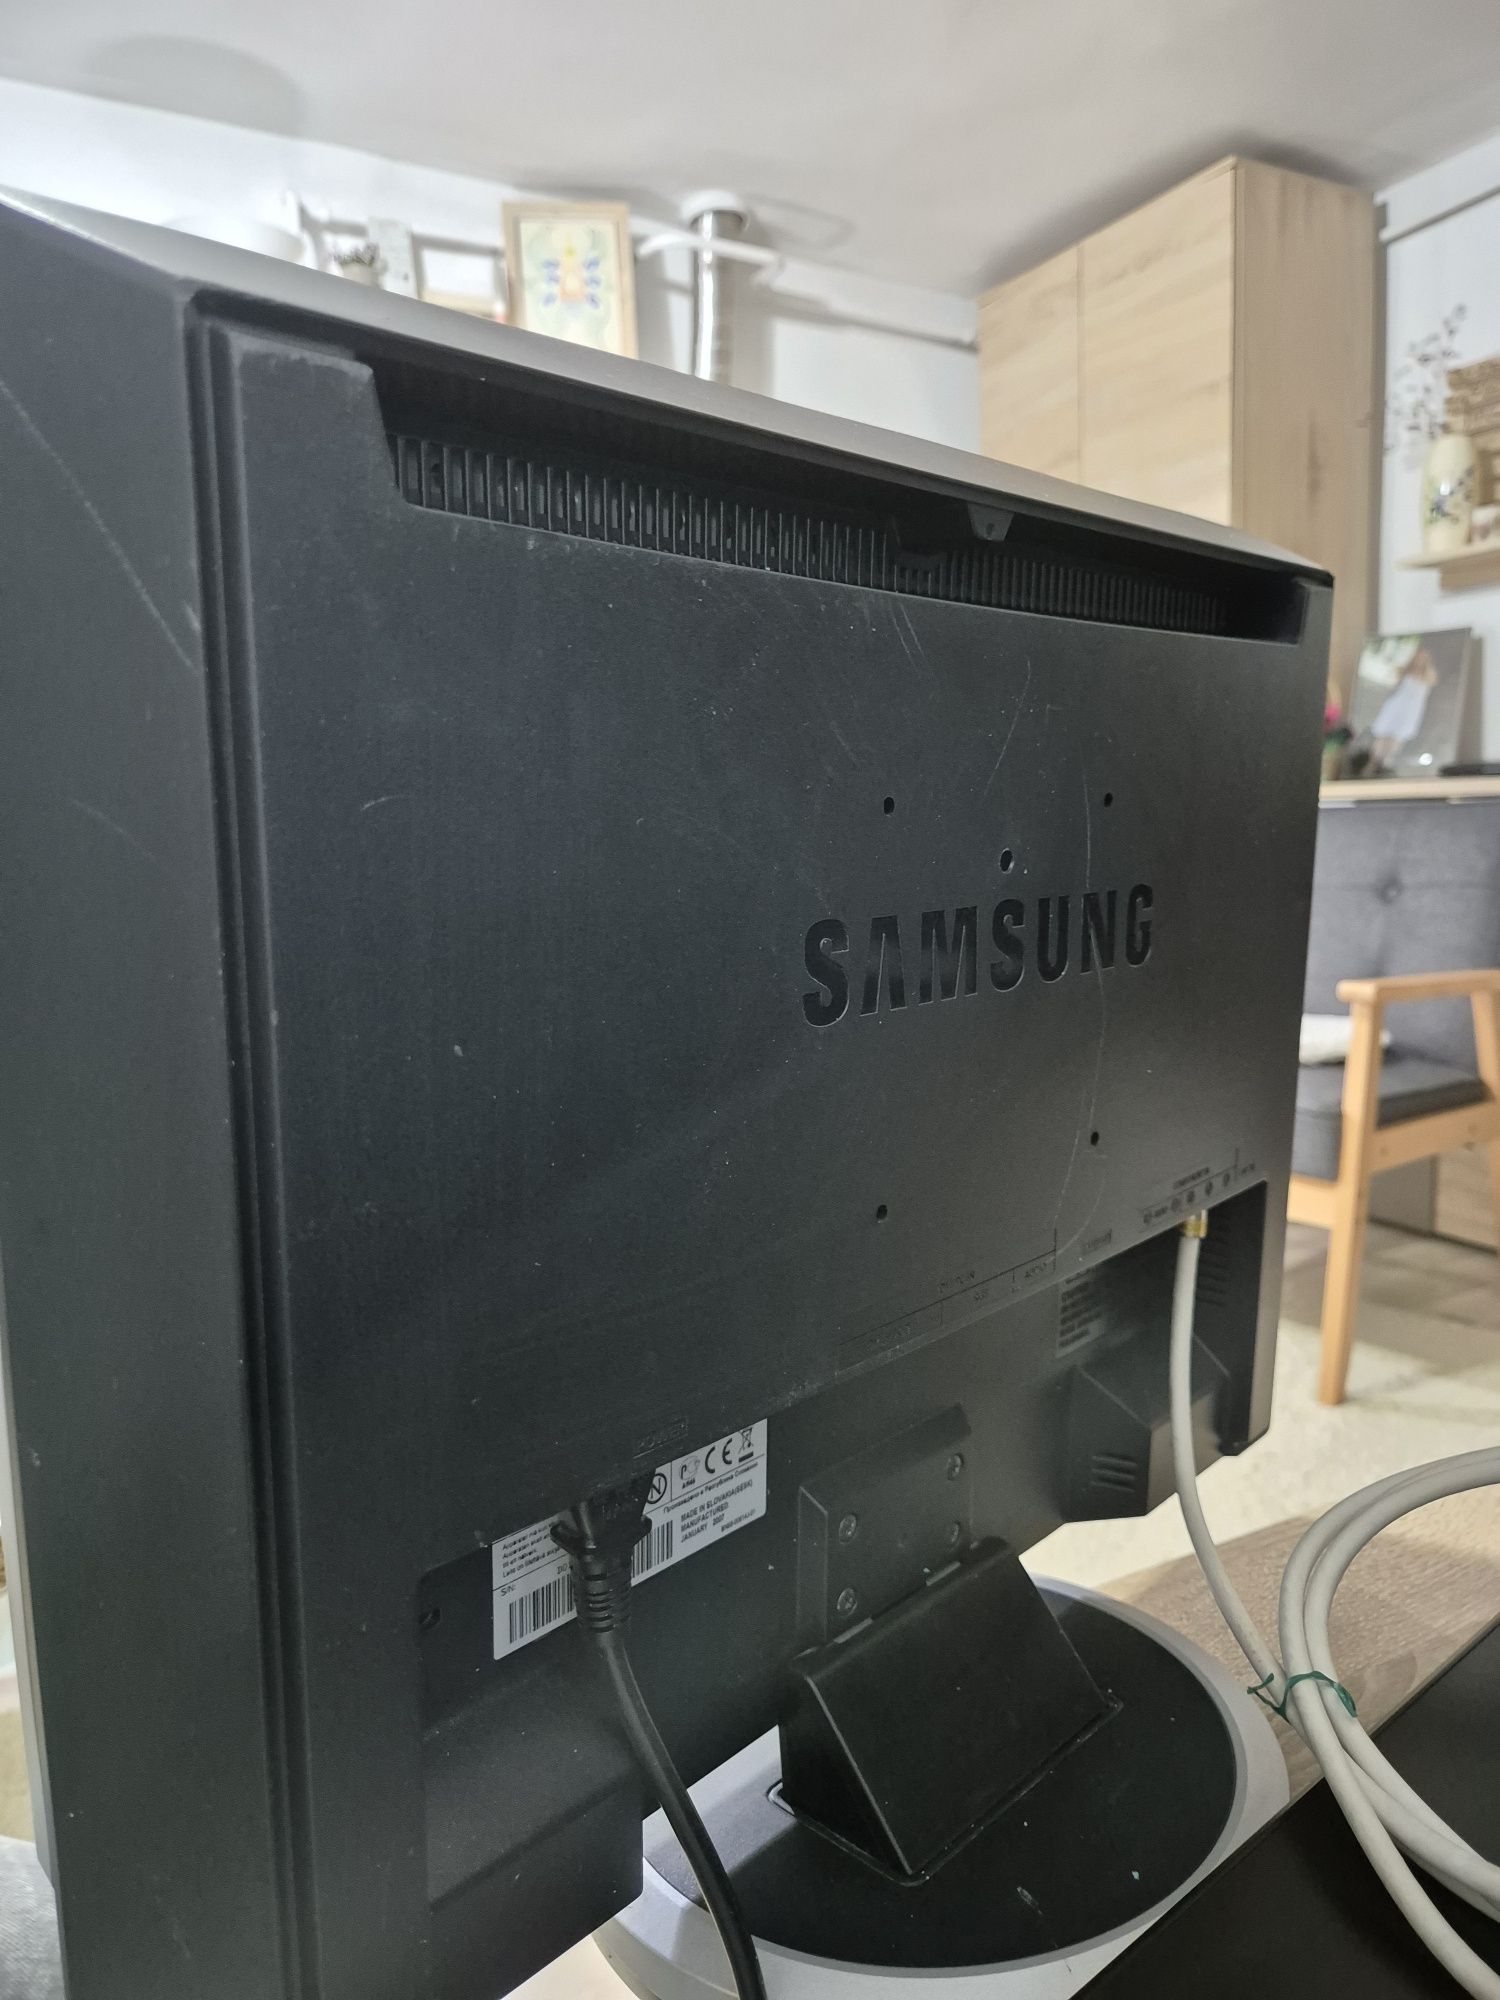 Tv lcd Samsung 19 inch vga dvi stereo